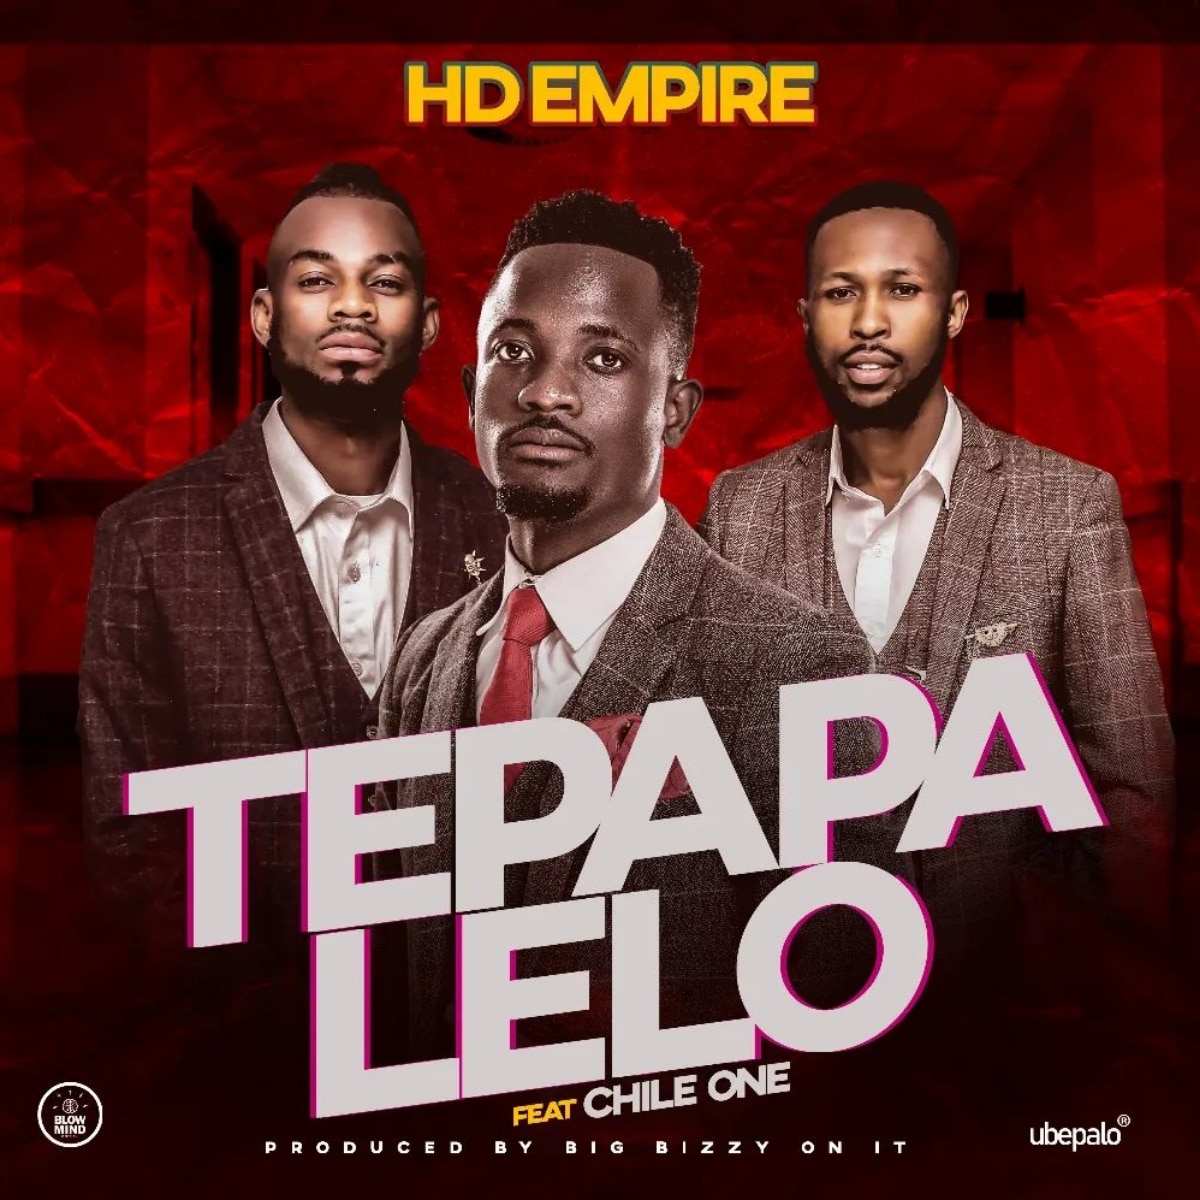 DOWNLOAD: HD Empire Ft. Chile One Mr Zambia – “Tepapa Lelo” Mp3